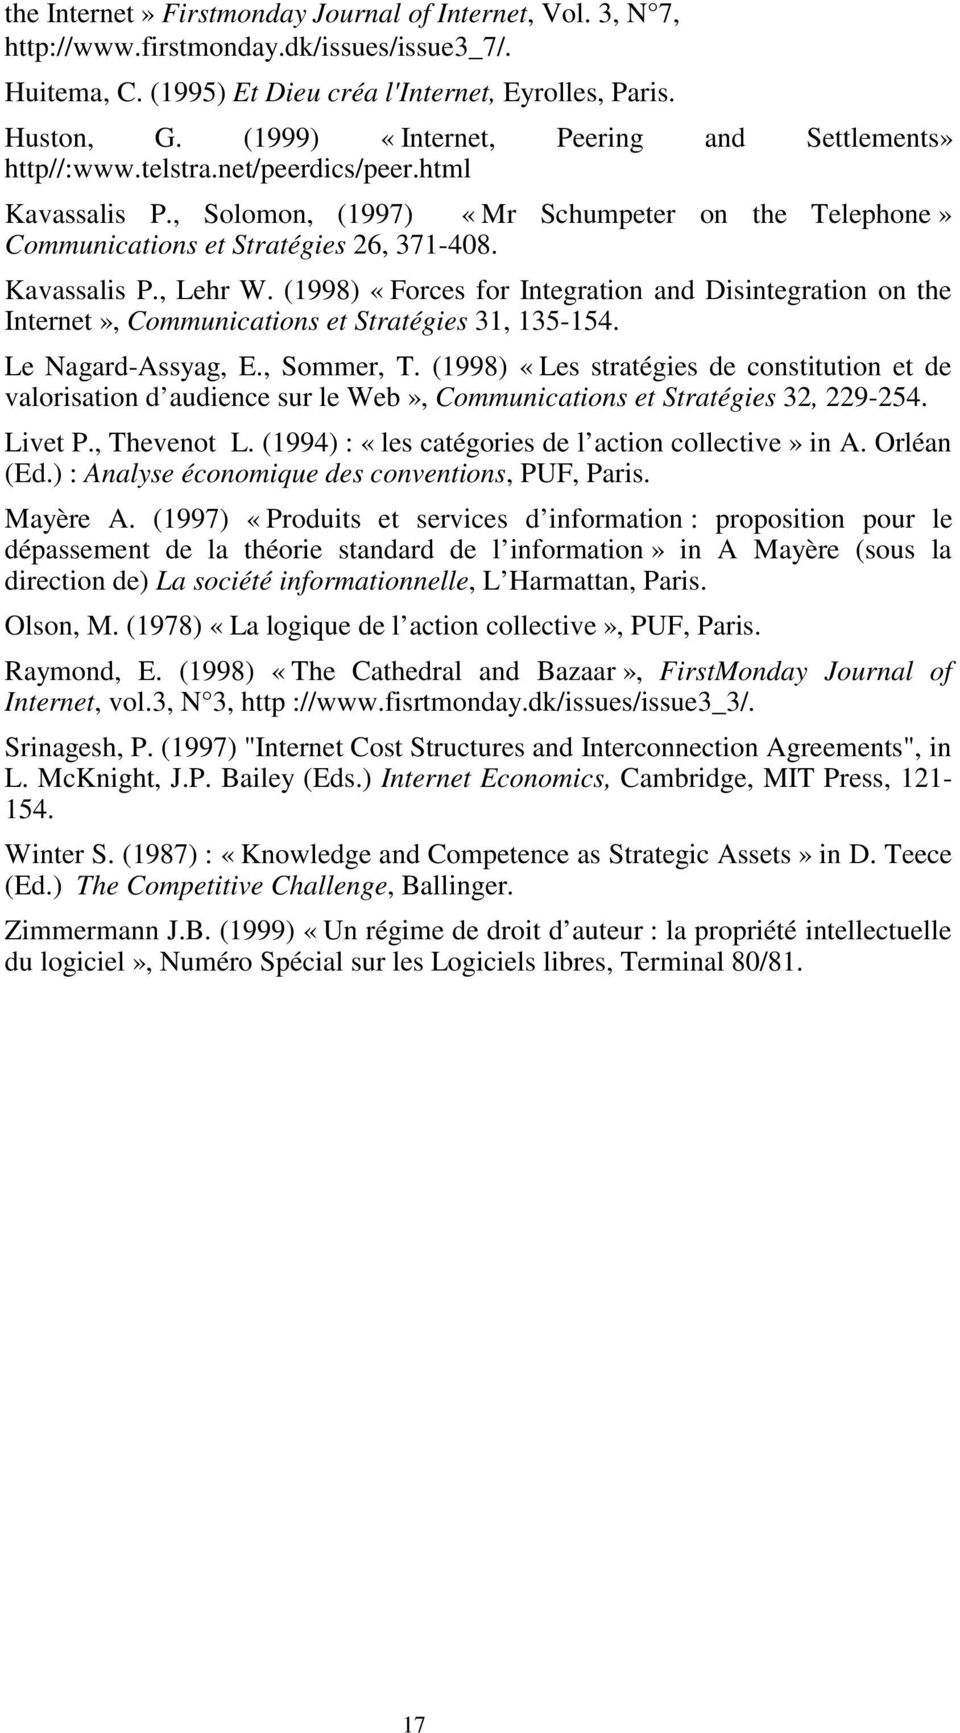 Kavassalis P., Lehr W. (1998) «Forces for Integration and Disintegration on the Internet», Communications et Stratégies 31, 135-154. Le Nagard-Assyag, E., Sommer, T.